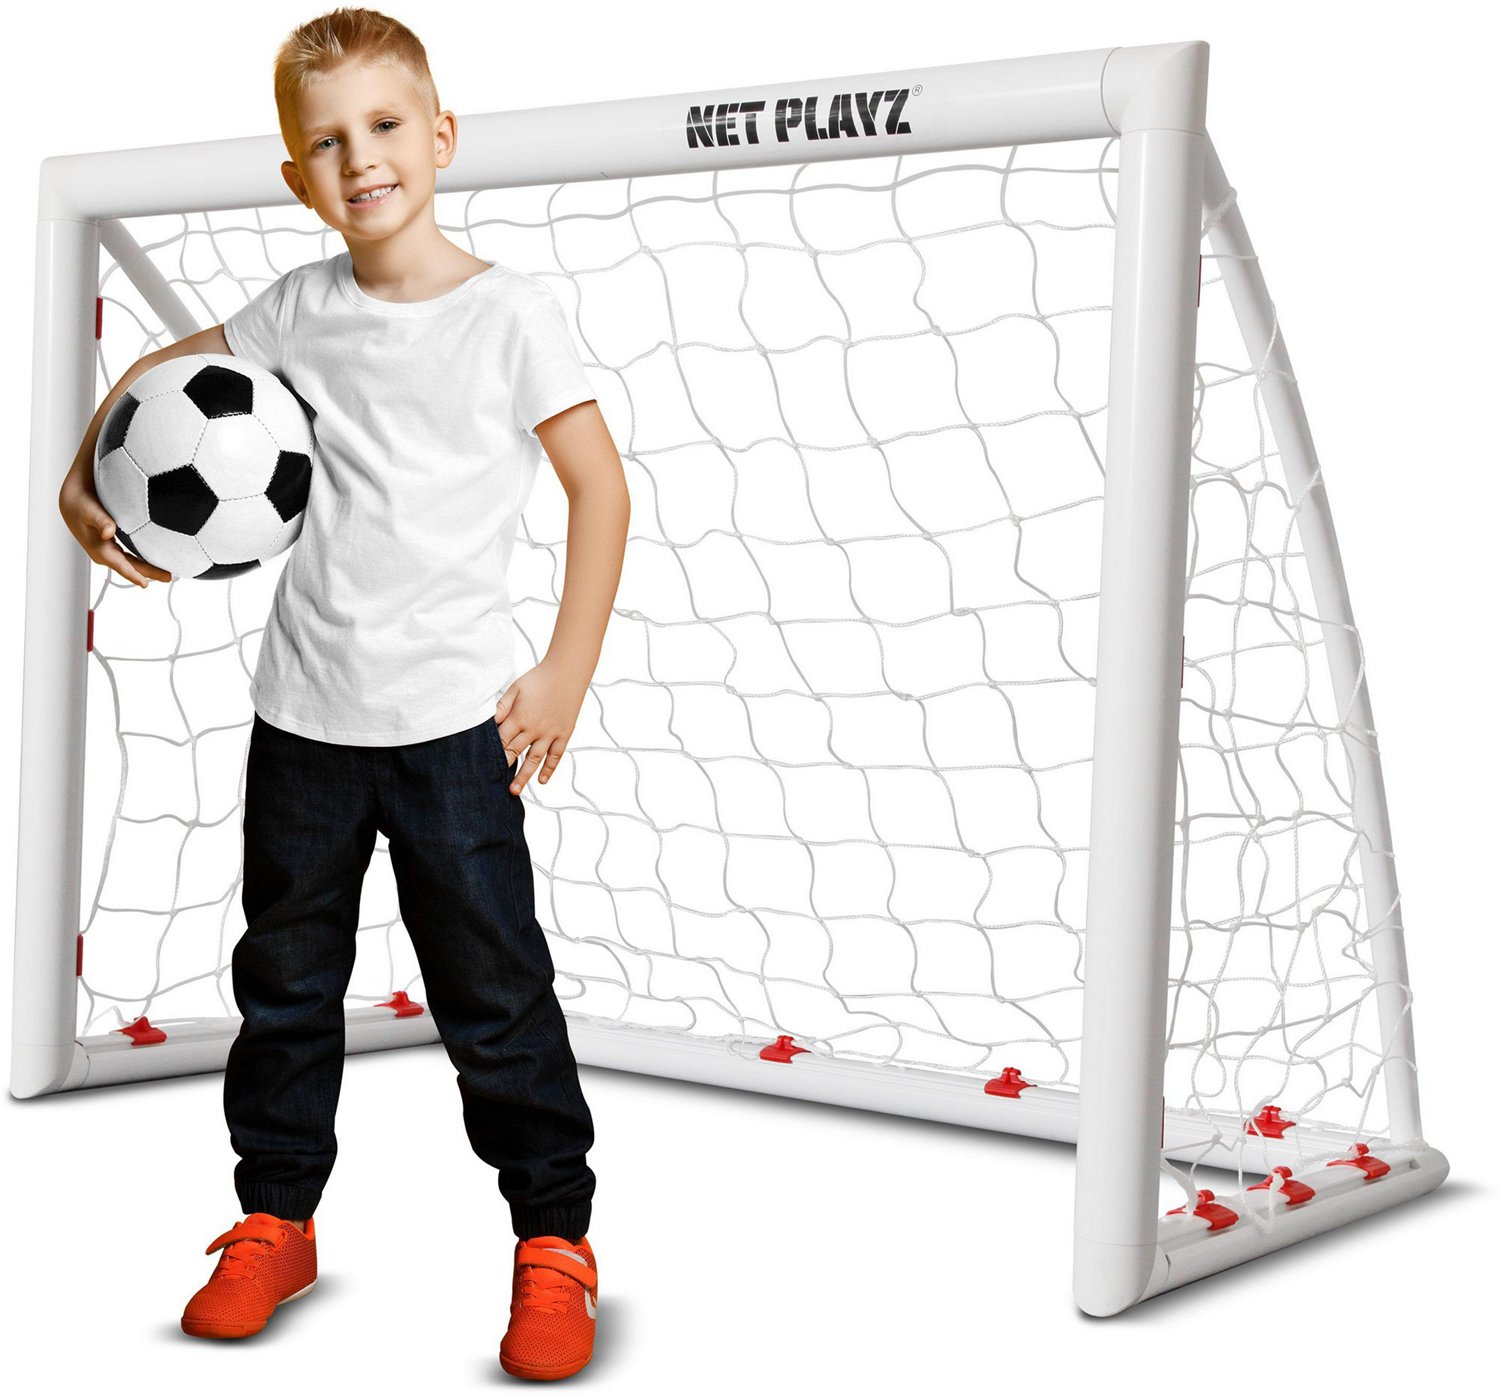 NetPlayz 4 ft x 2 ft x 3 ft Backyard PVC Soccer Goal